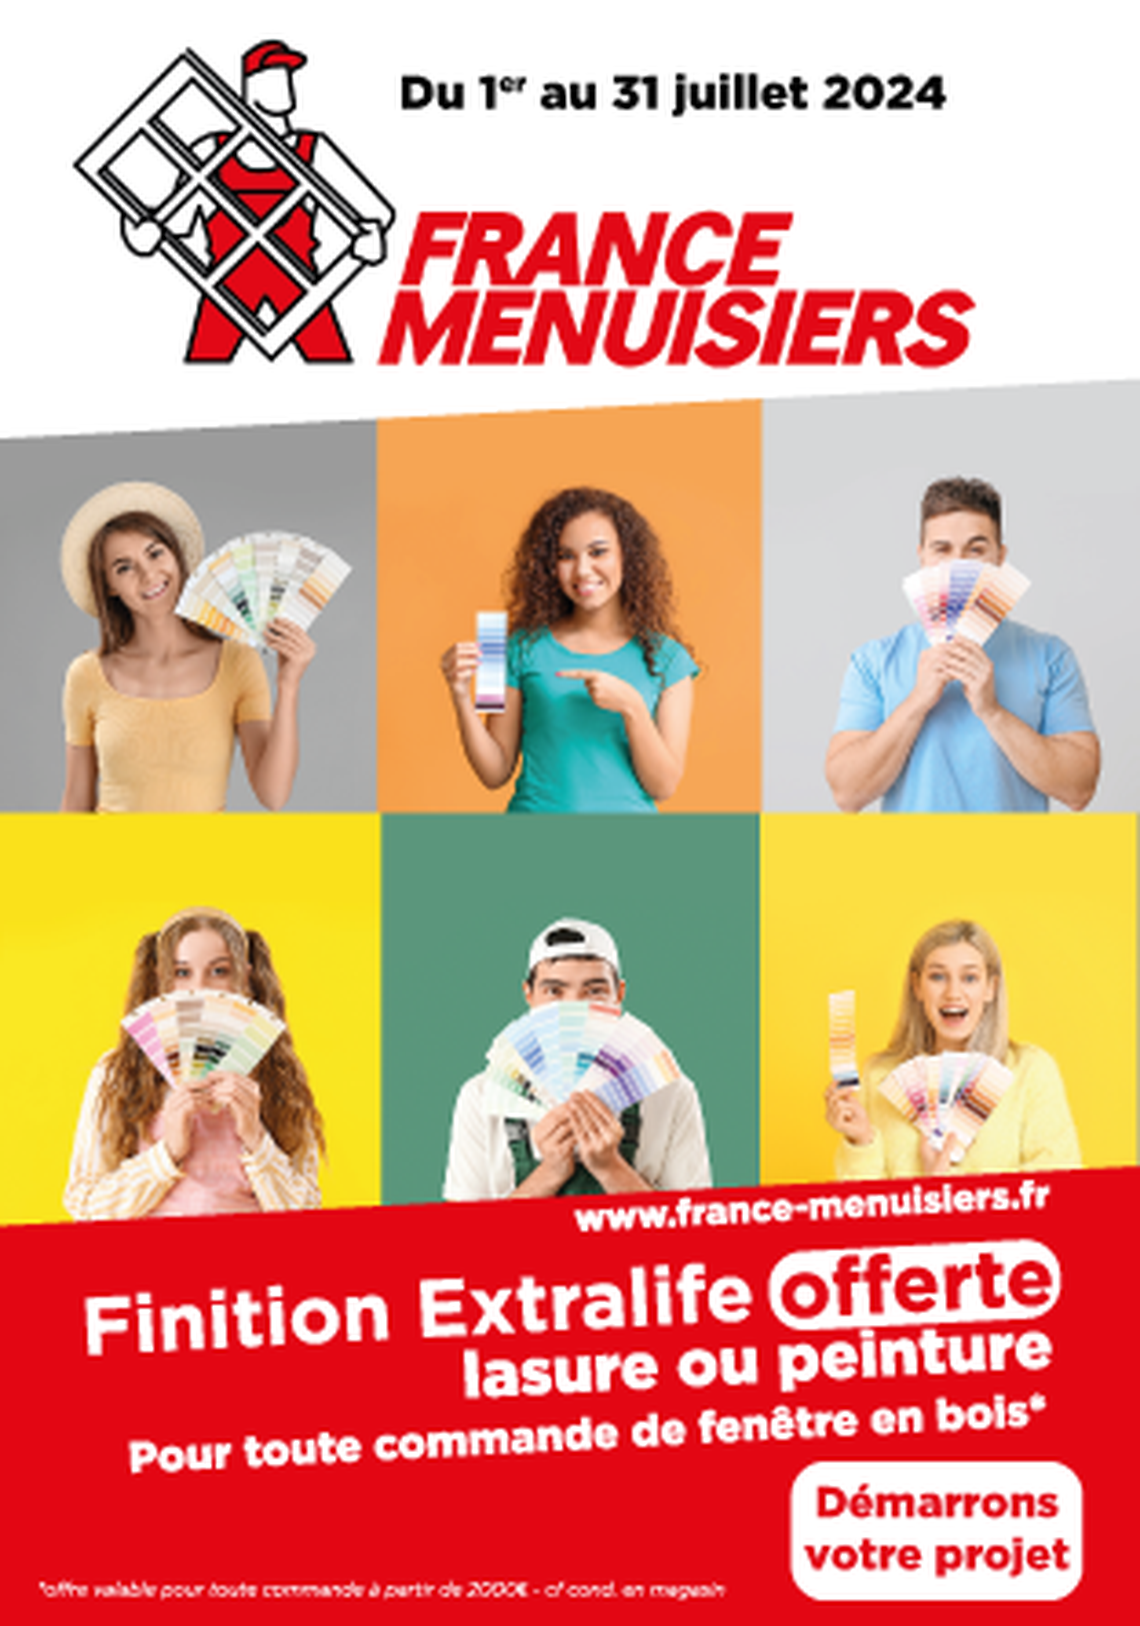 FRANCE MENUISIERS Bordeaux - Blanquefort - Finition Extralife Offerte